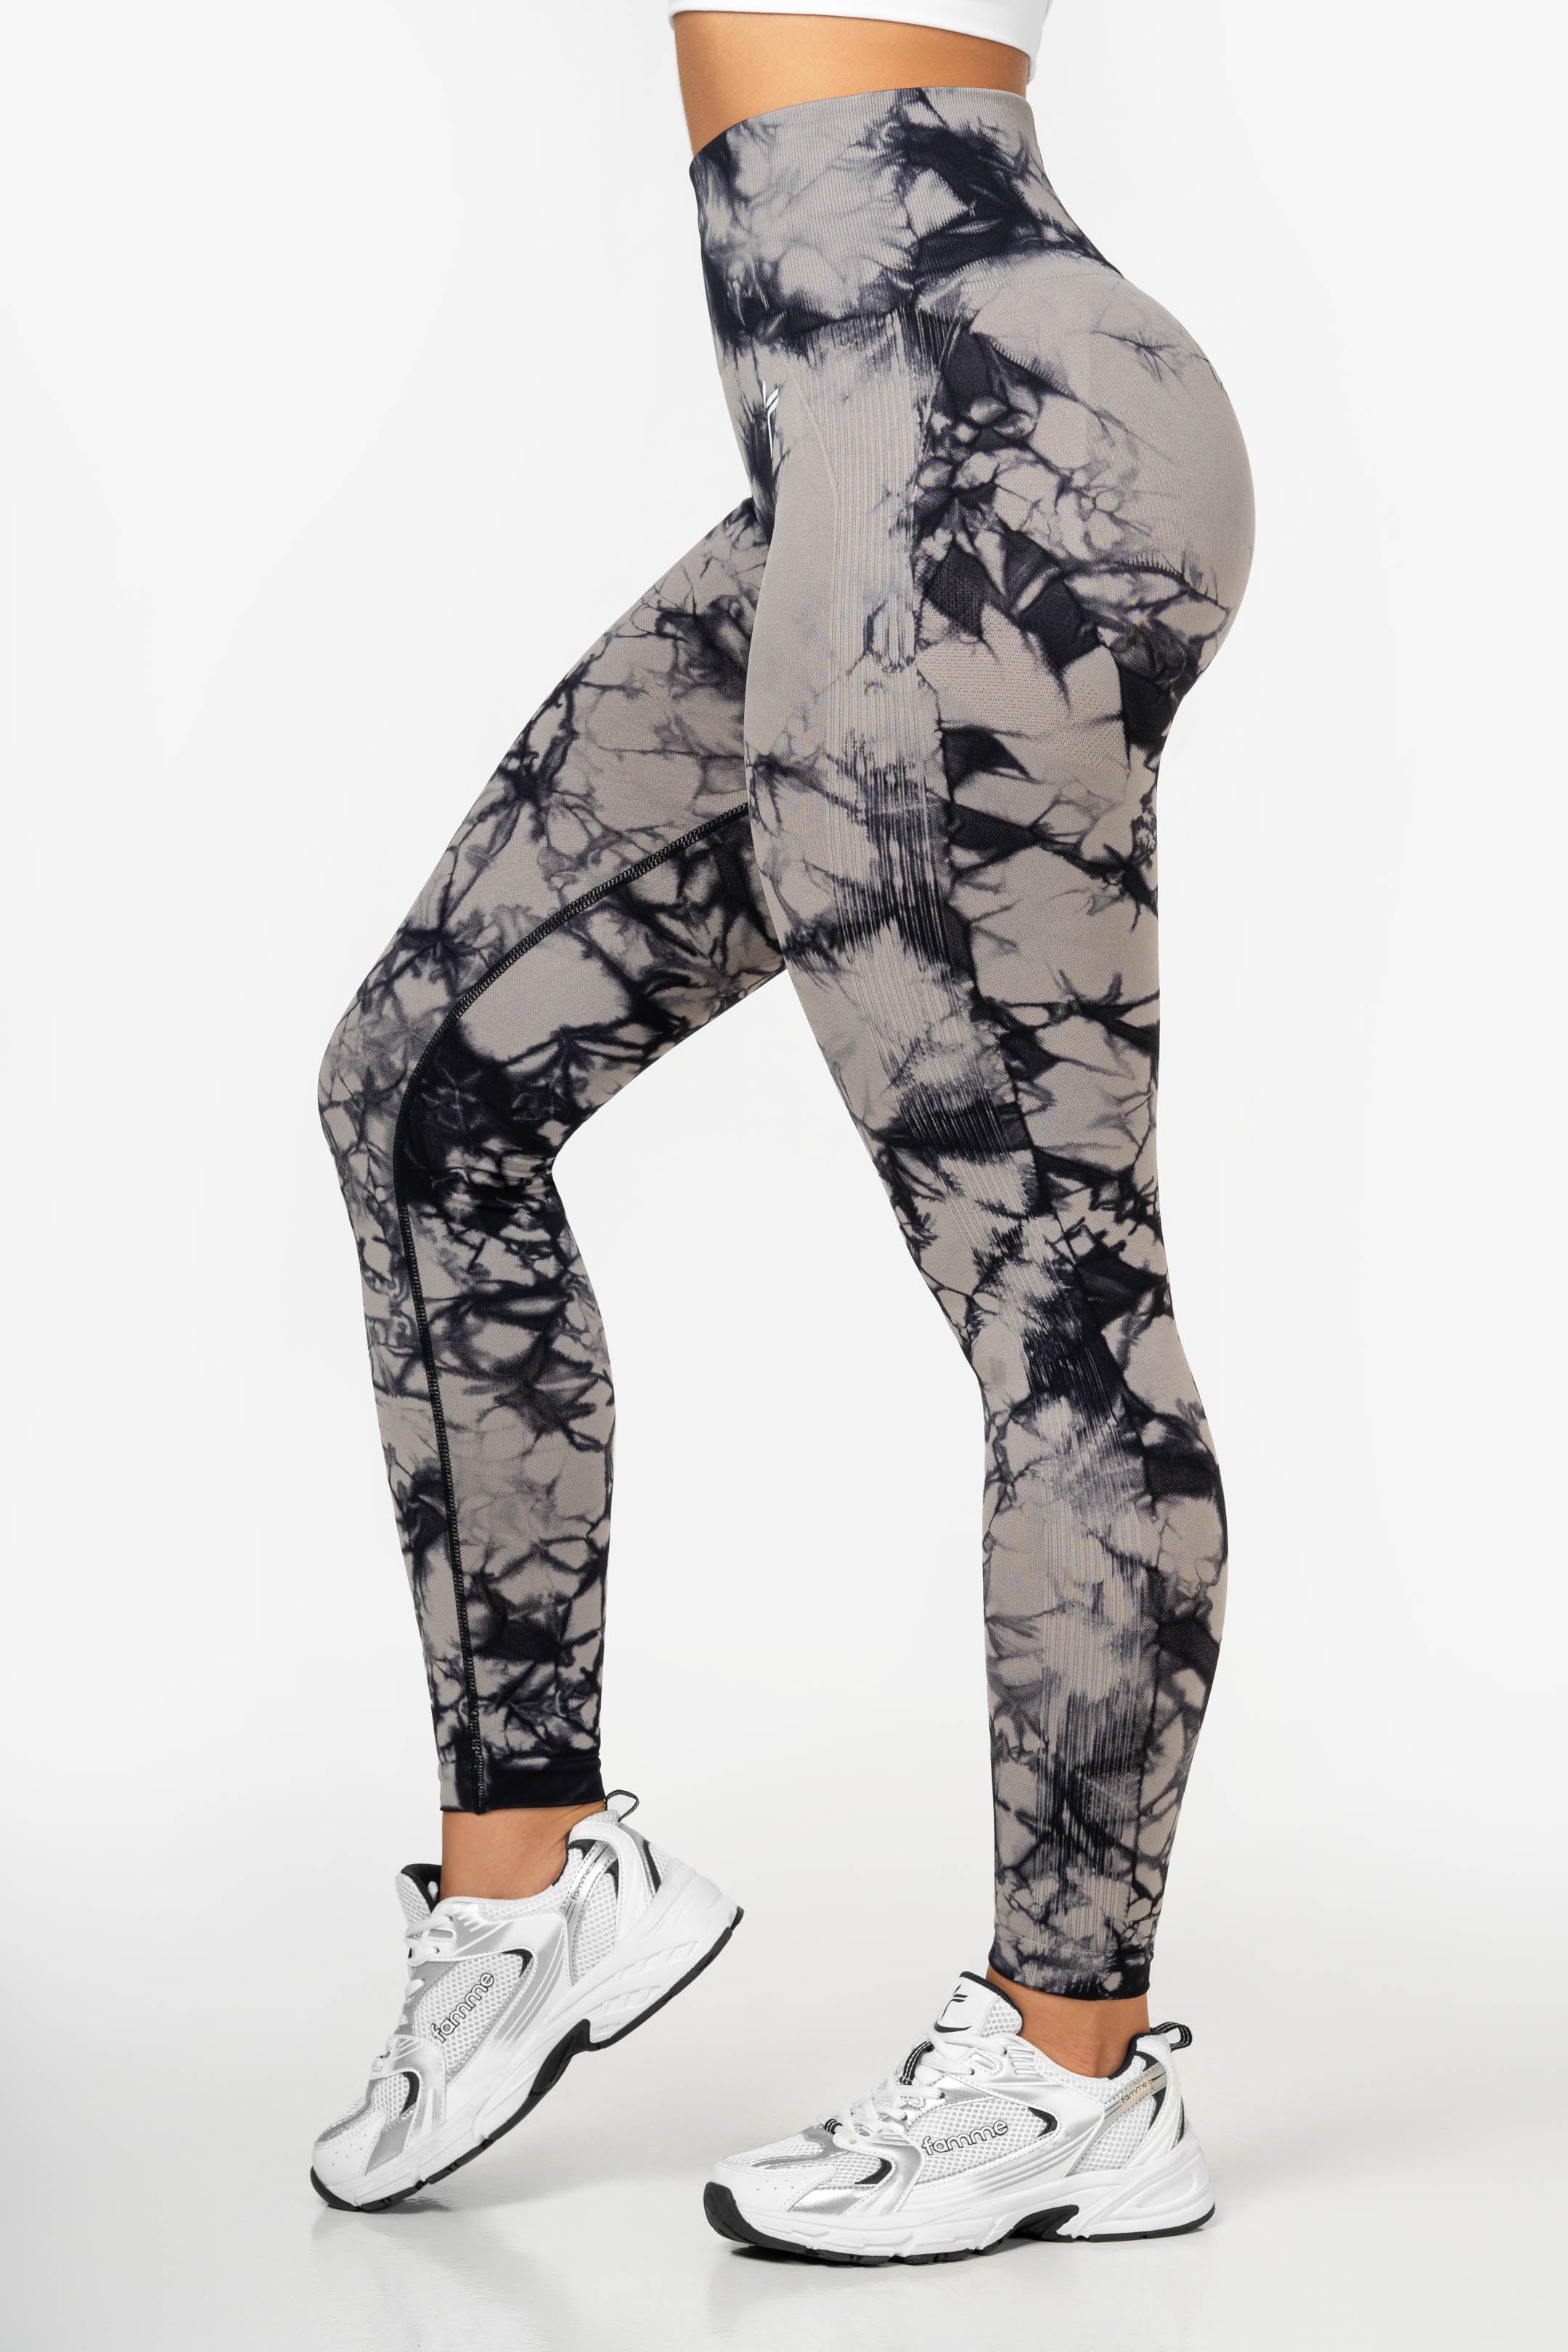 Buy YEOREO Women Camo Workout Scrunch Butt Leggings Seamless High Waisted  Athletic Yoga Leggings, #0 Camo Black 2.0, Medium at Amazon.in